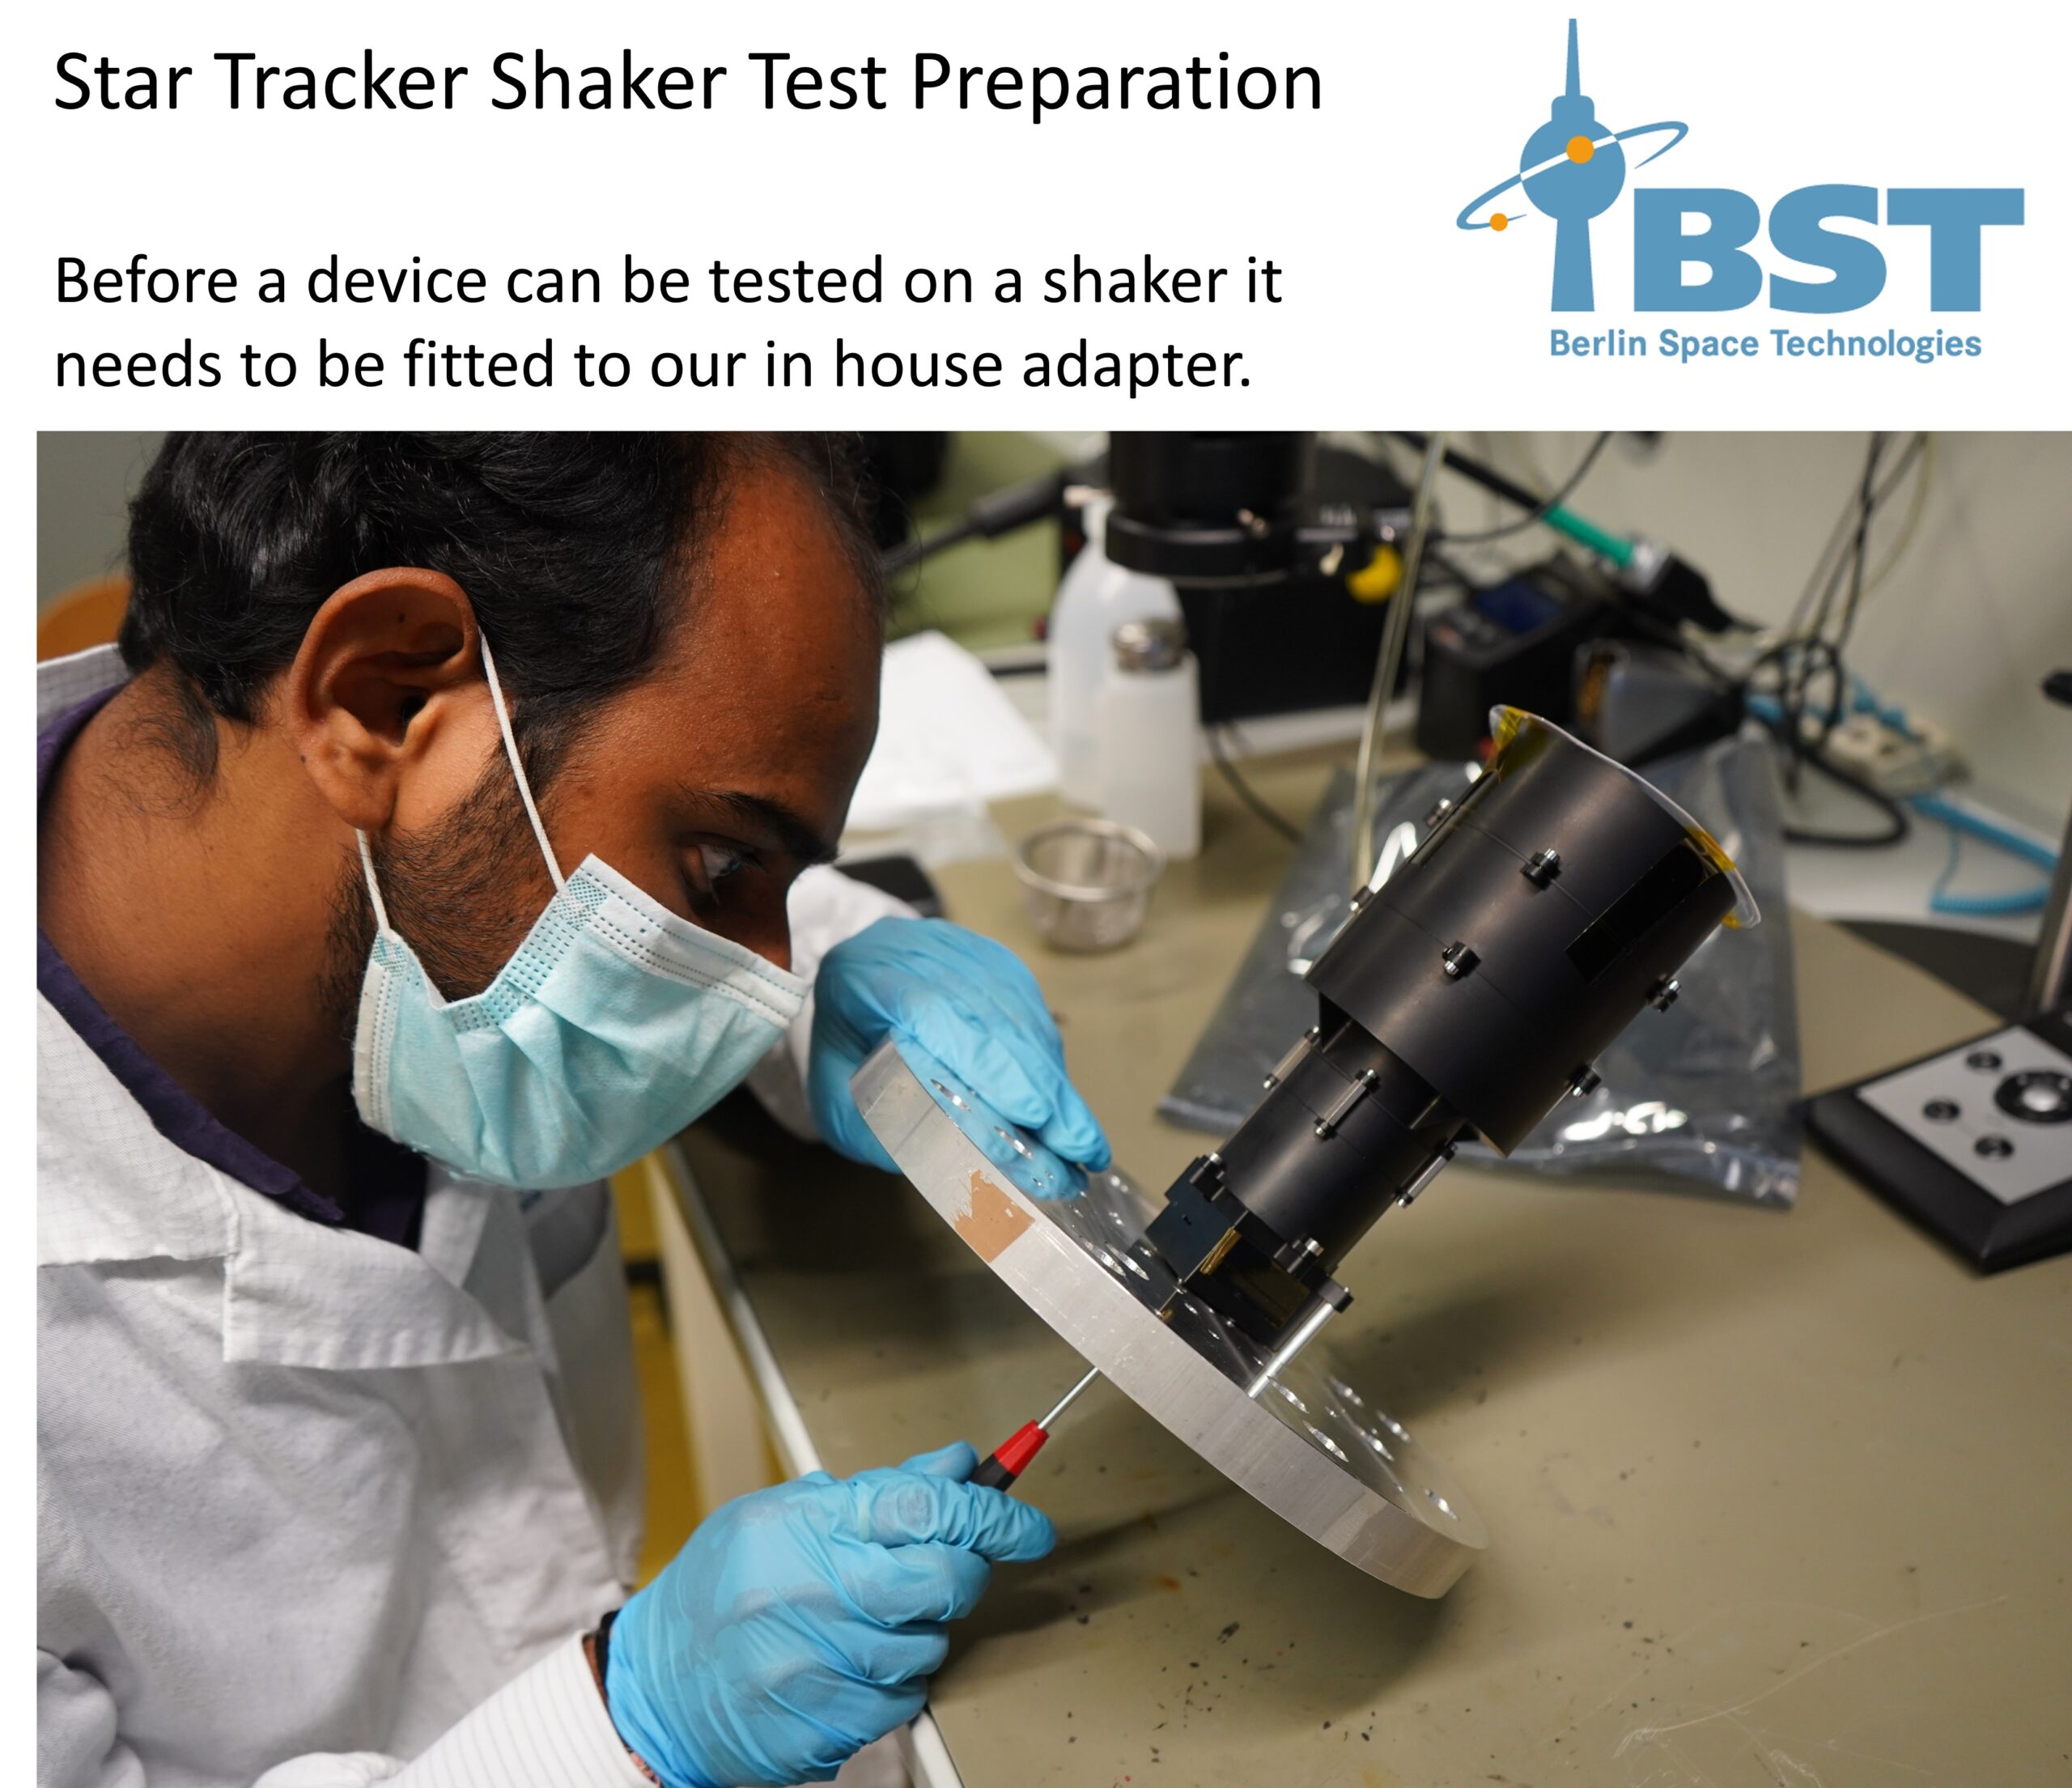 Star Tracker Shaker Test Preparation